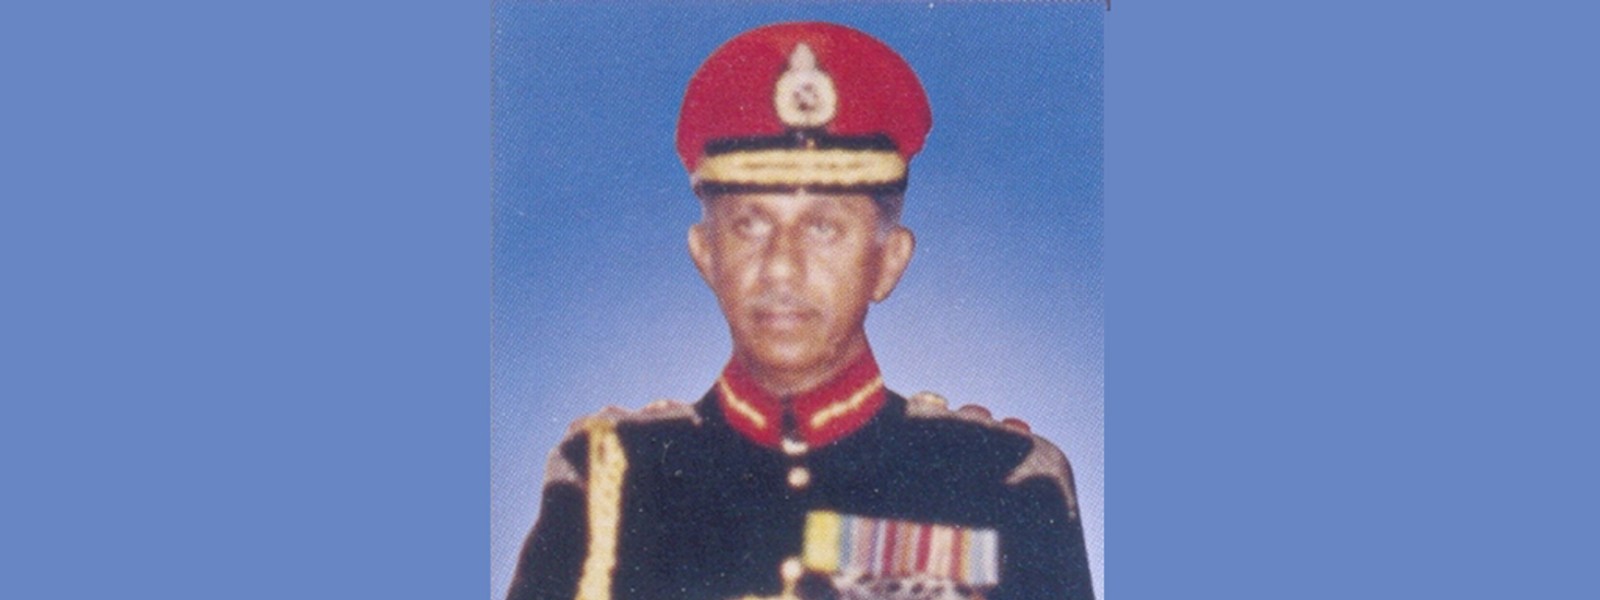 Former Secretary Defence & Army Chief of Staff, General Cyril Ranatunga (Retd) Passes Away